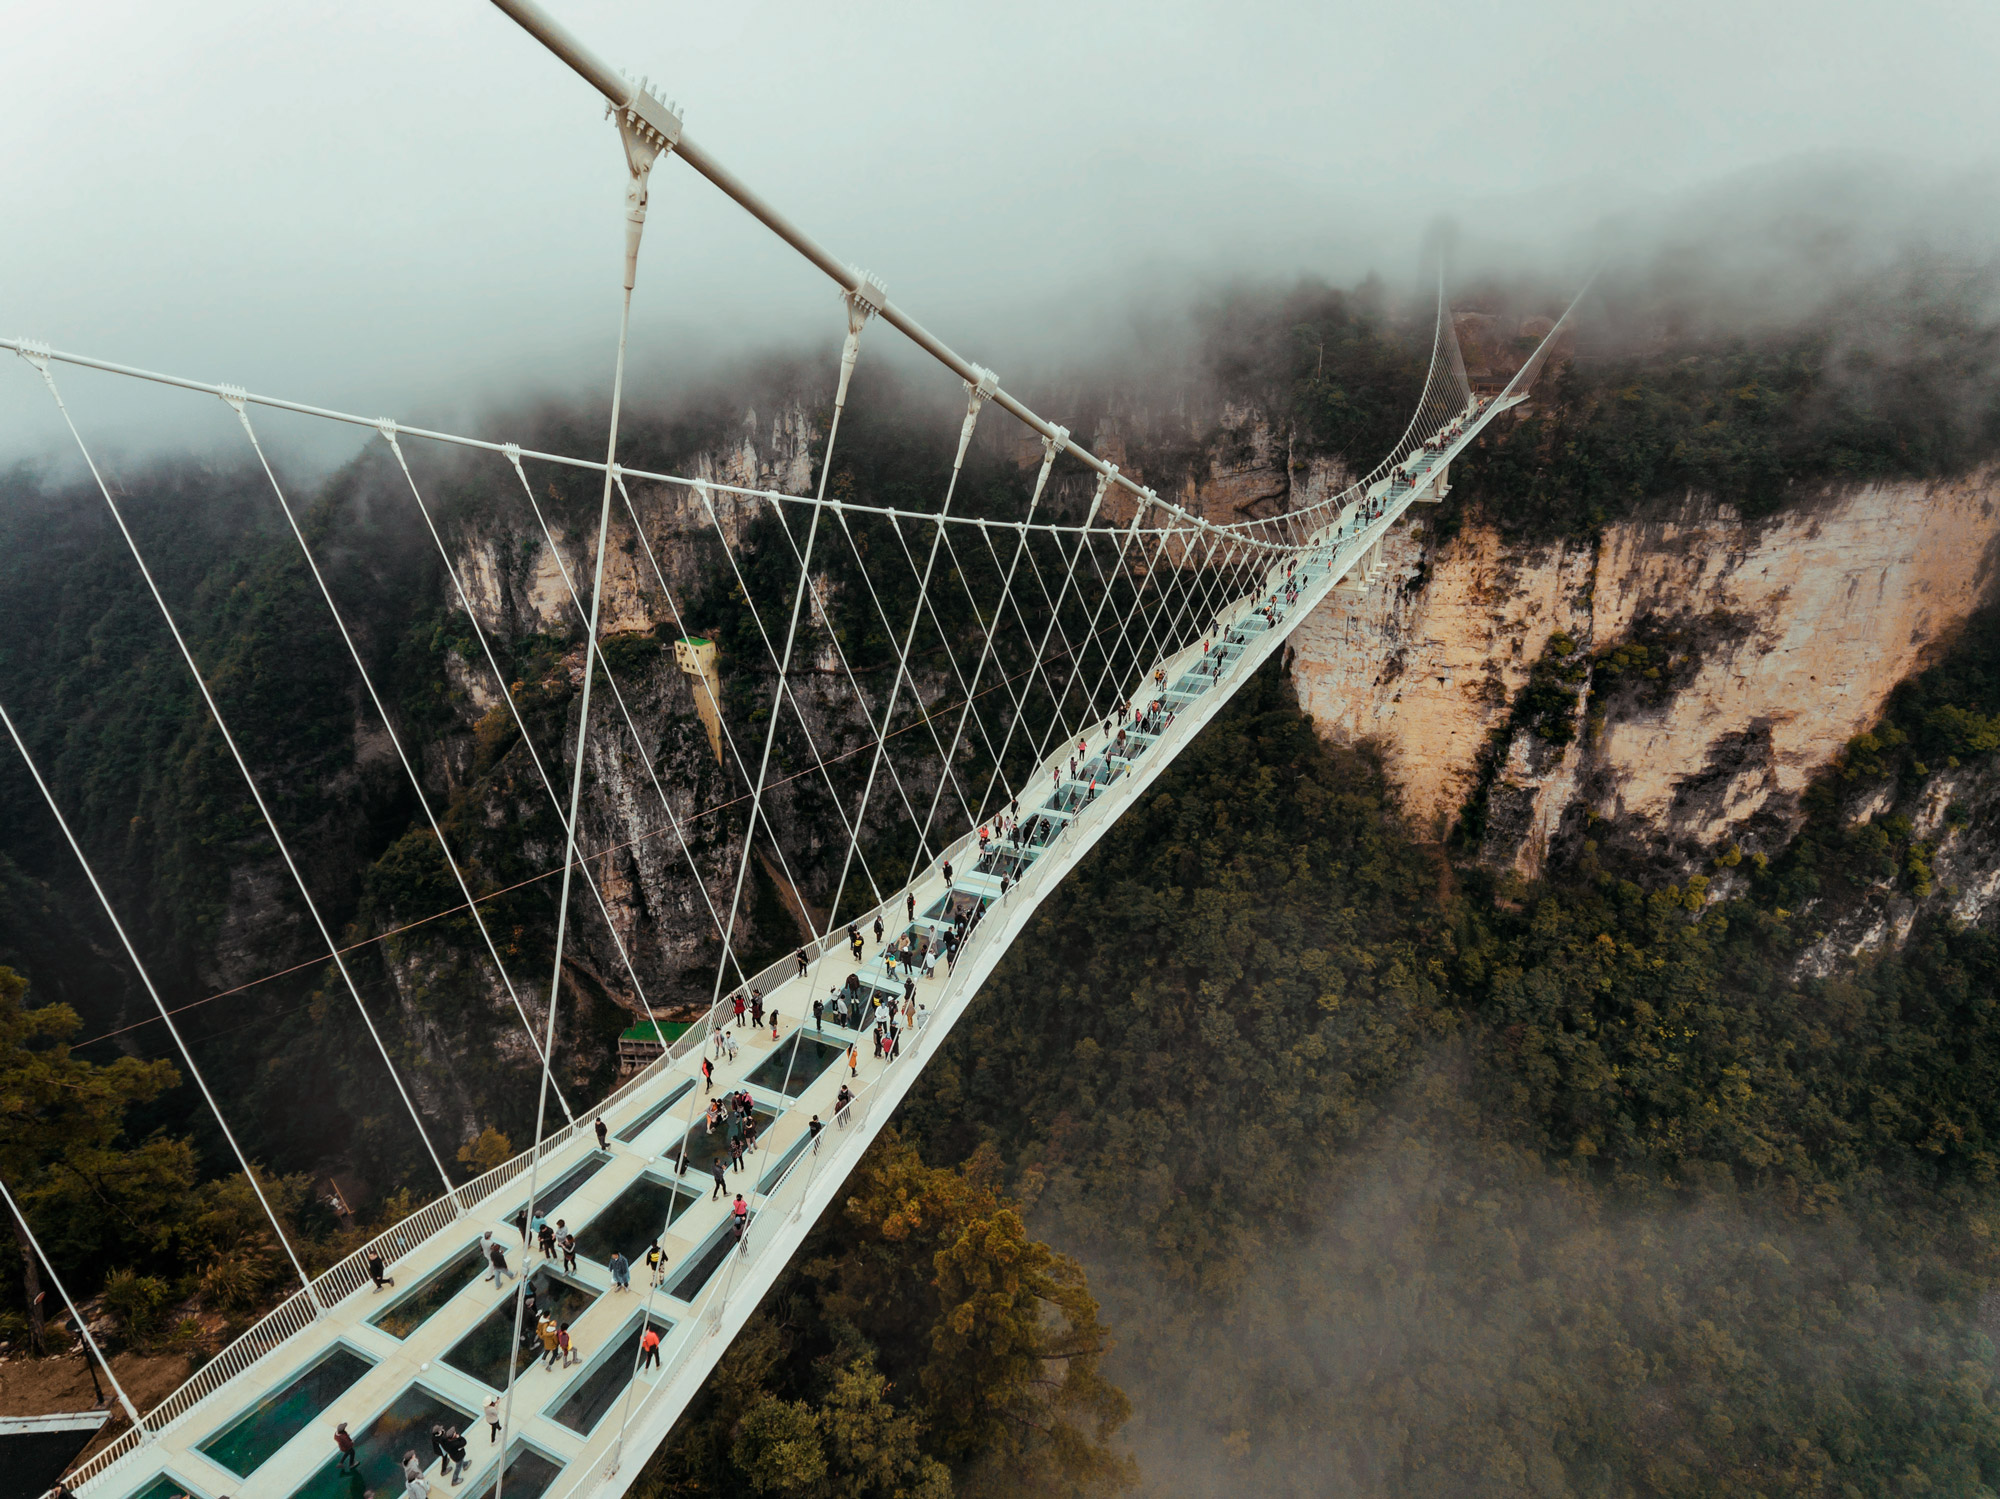 A glass-floored suspension bridge crosses the dense woodland